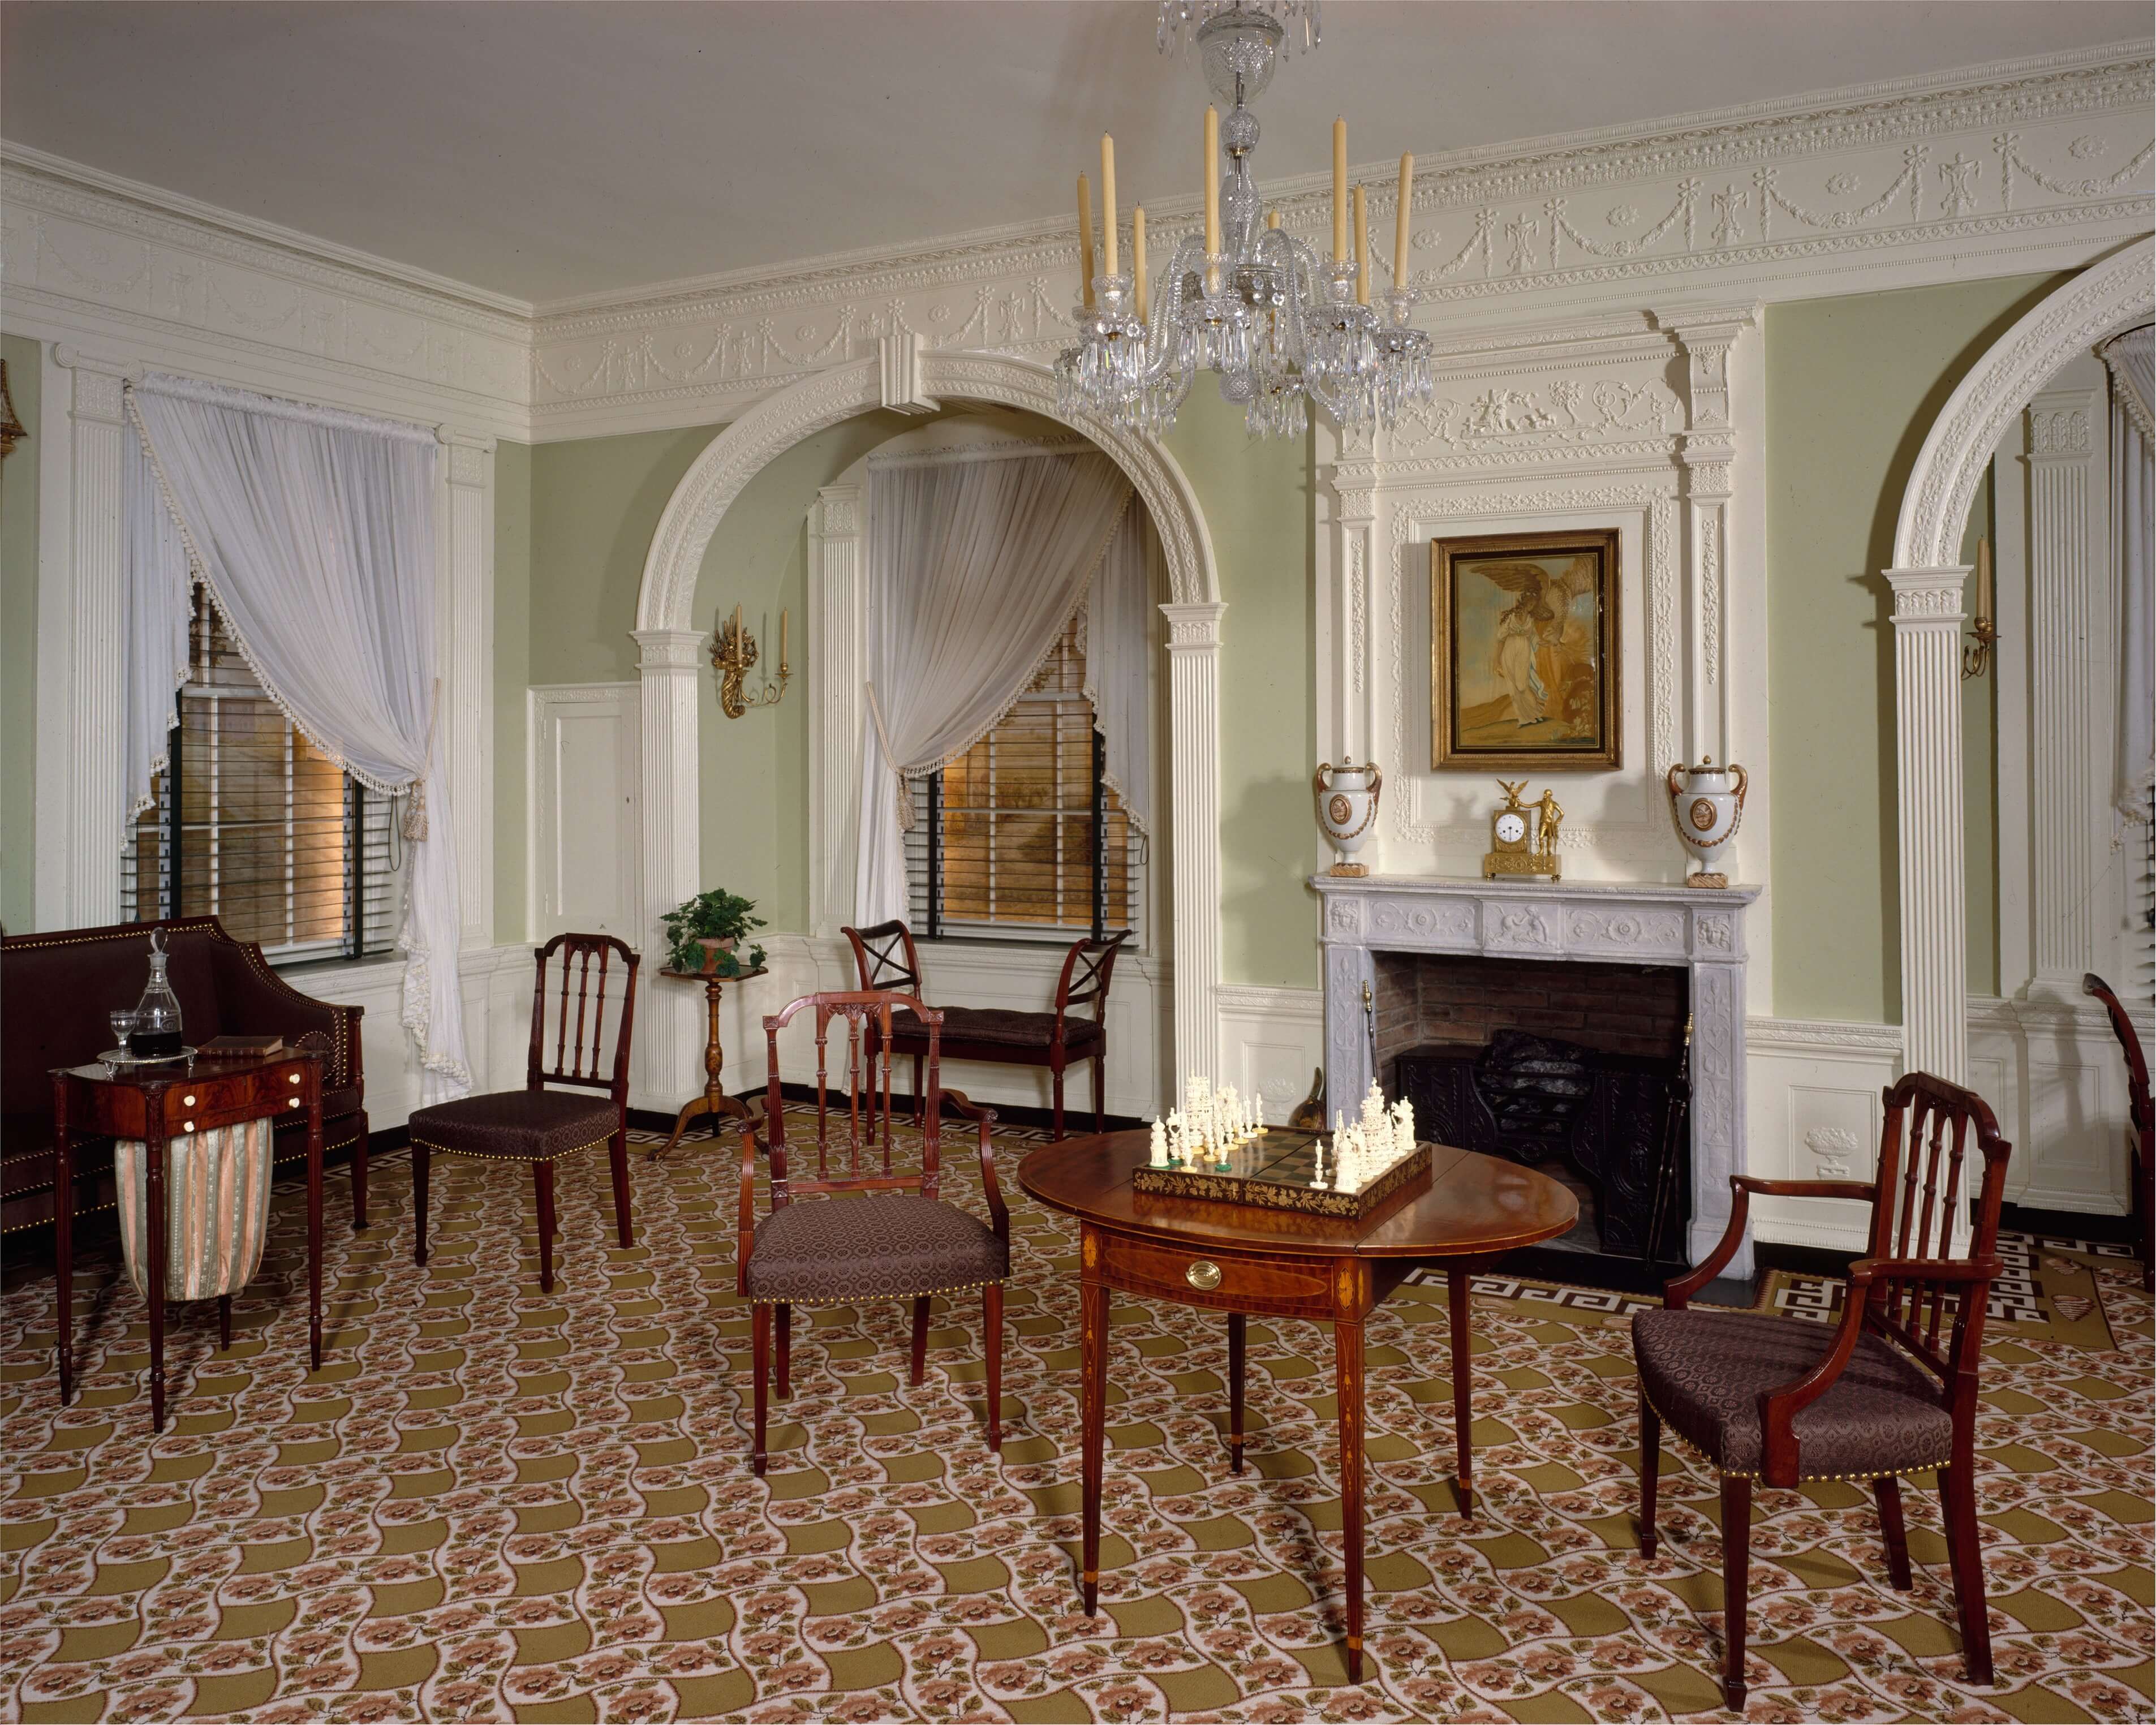 early 19th century interior